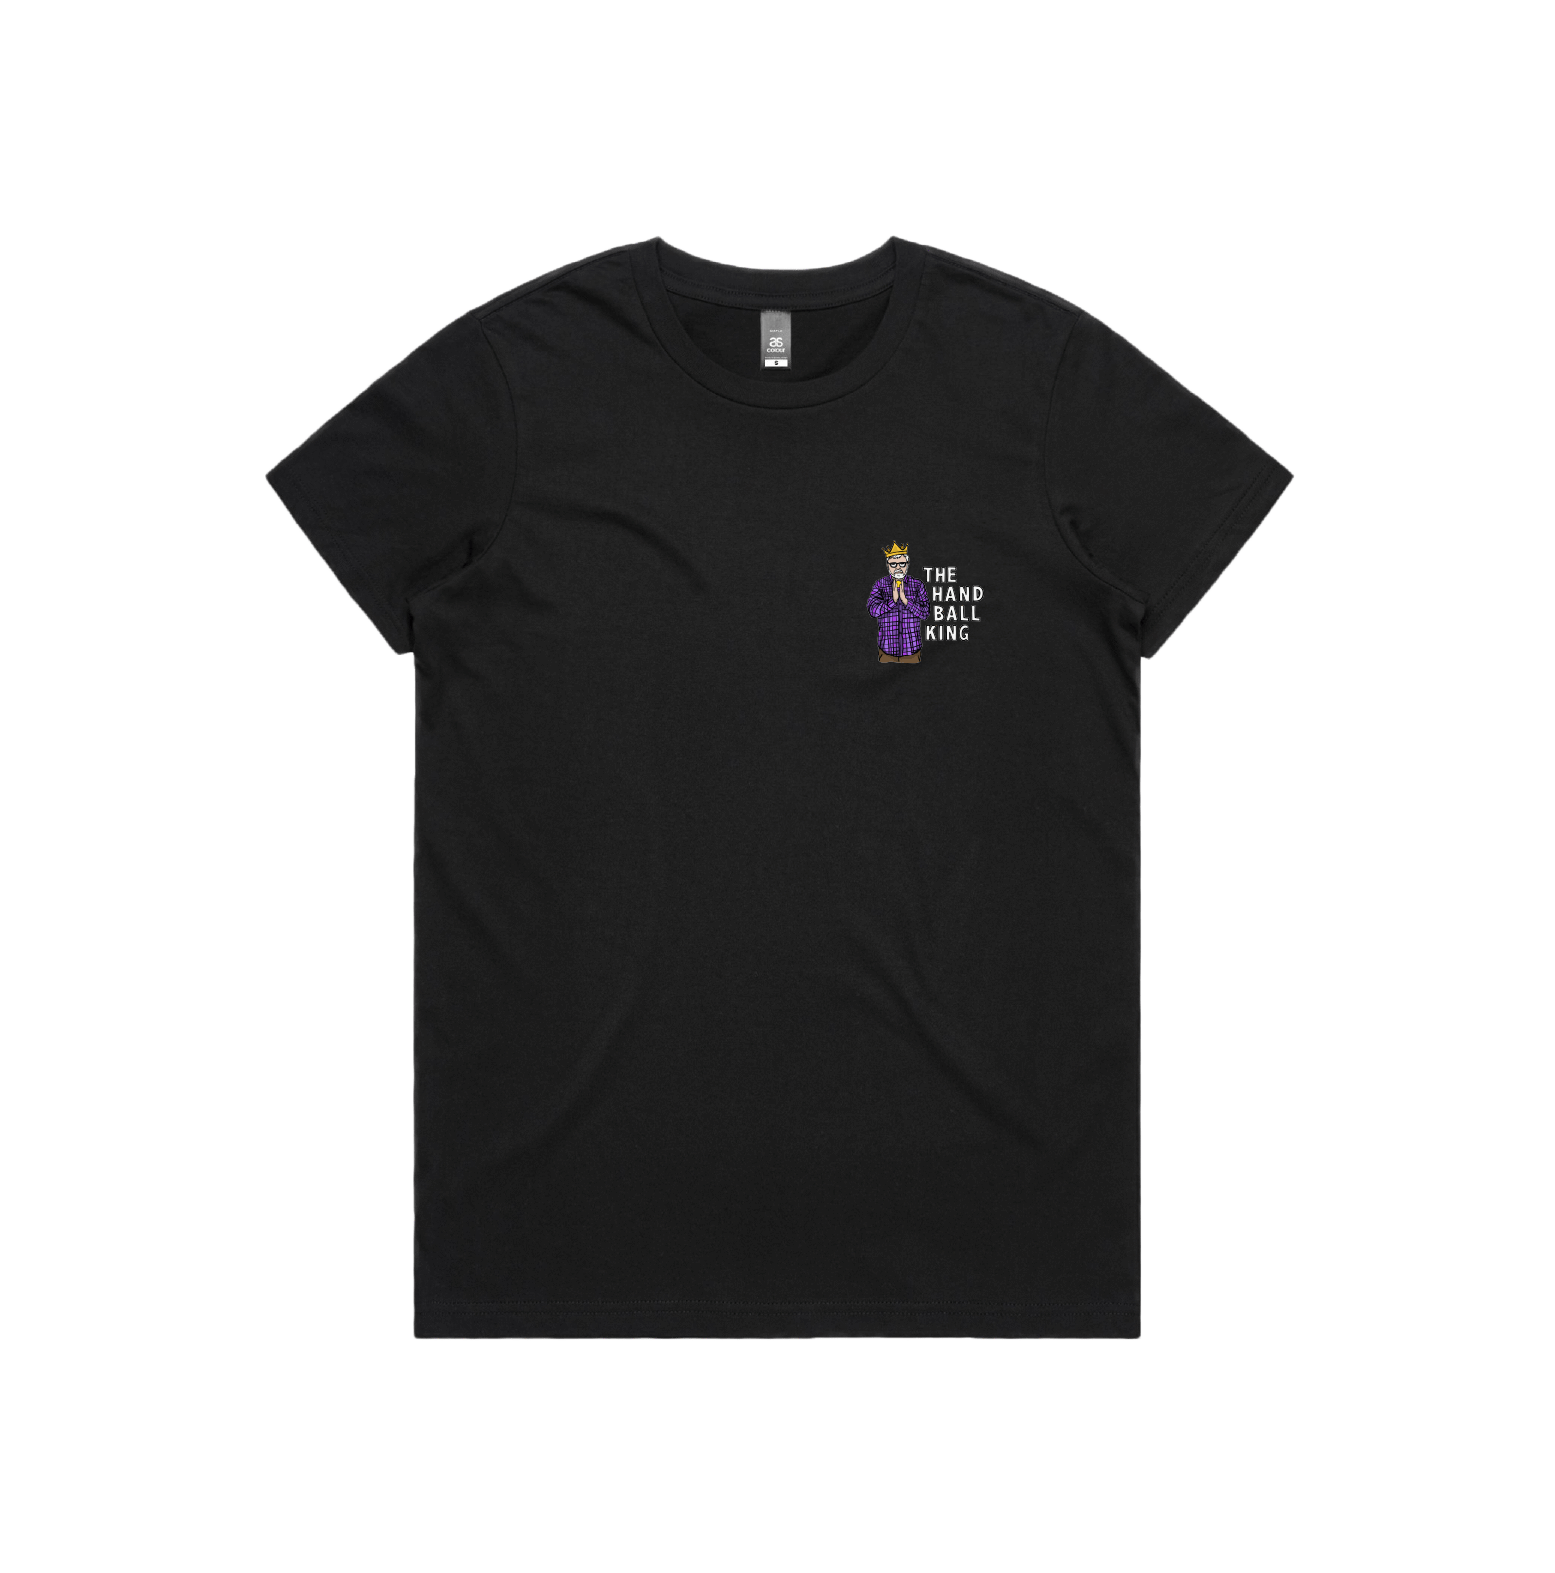 XS / Black / Small Front Design K Rudd Handball King 👑 - Women's T Shirt